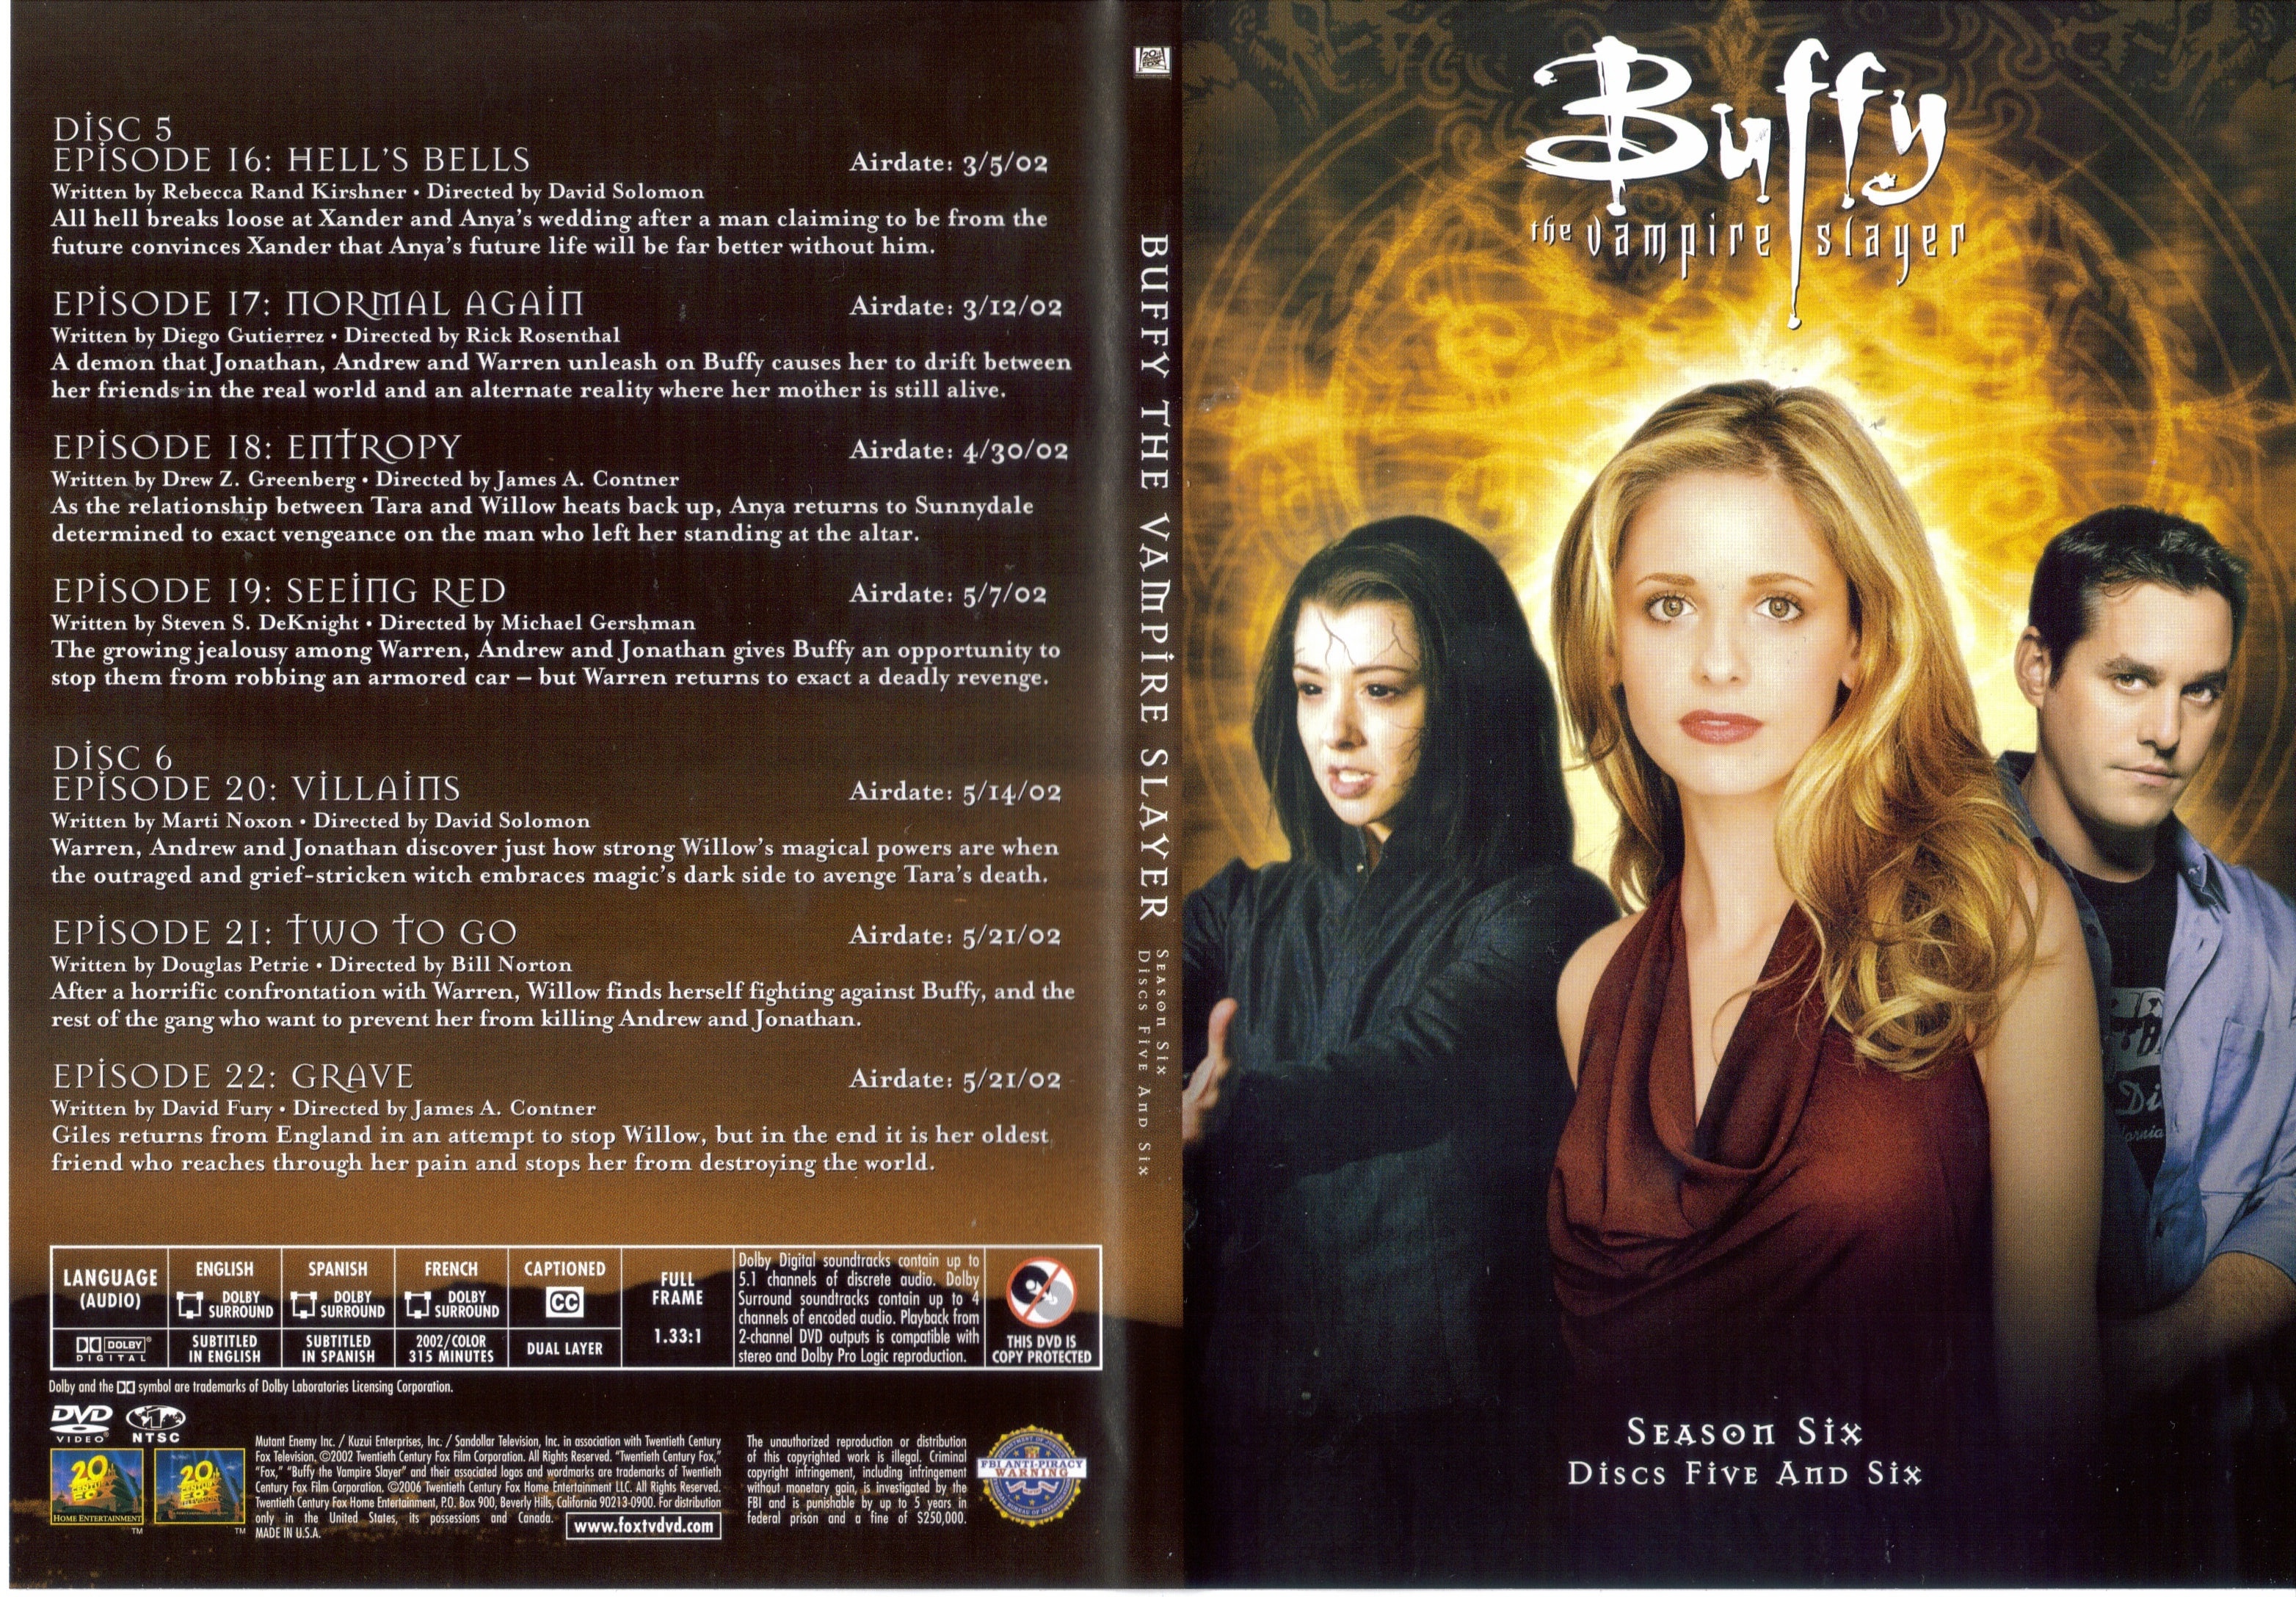 Jaquette DVD Buffy Saison 6 DVD 3 (Canadienne)